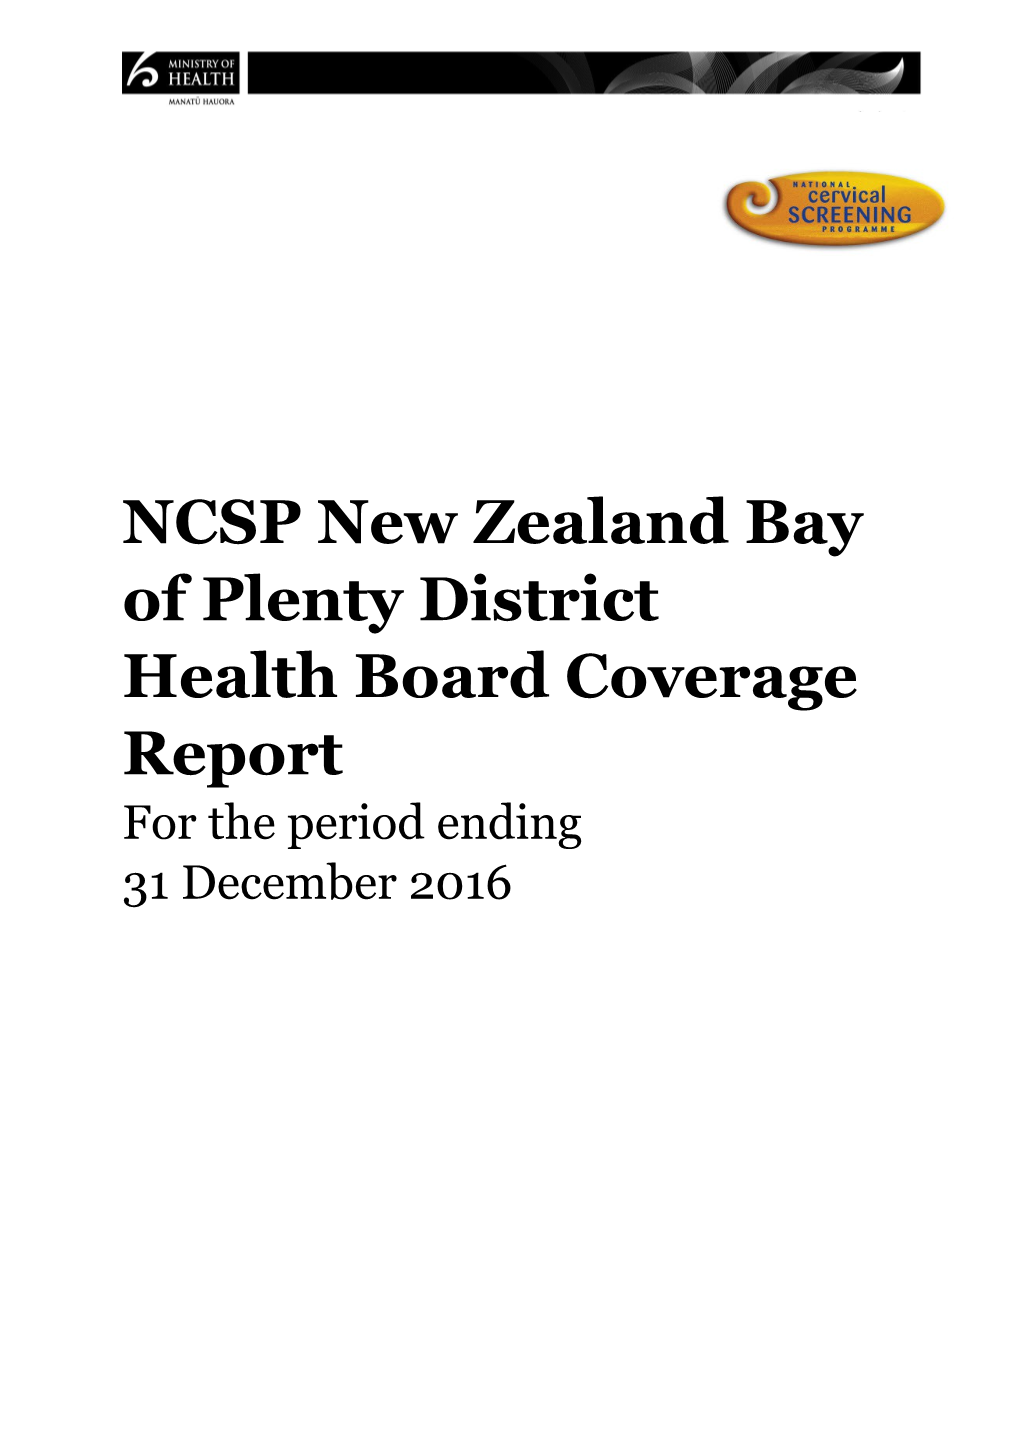 NCSP New Zealand Bay of Plenty District Health Boardcoverage Report